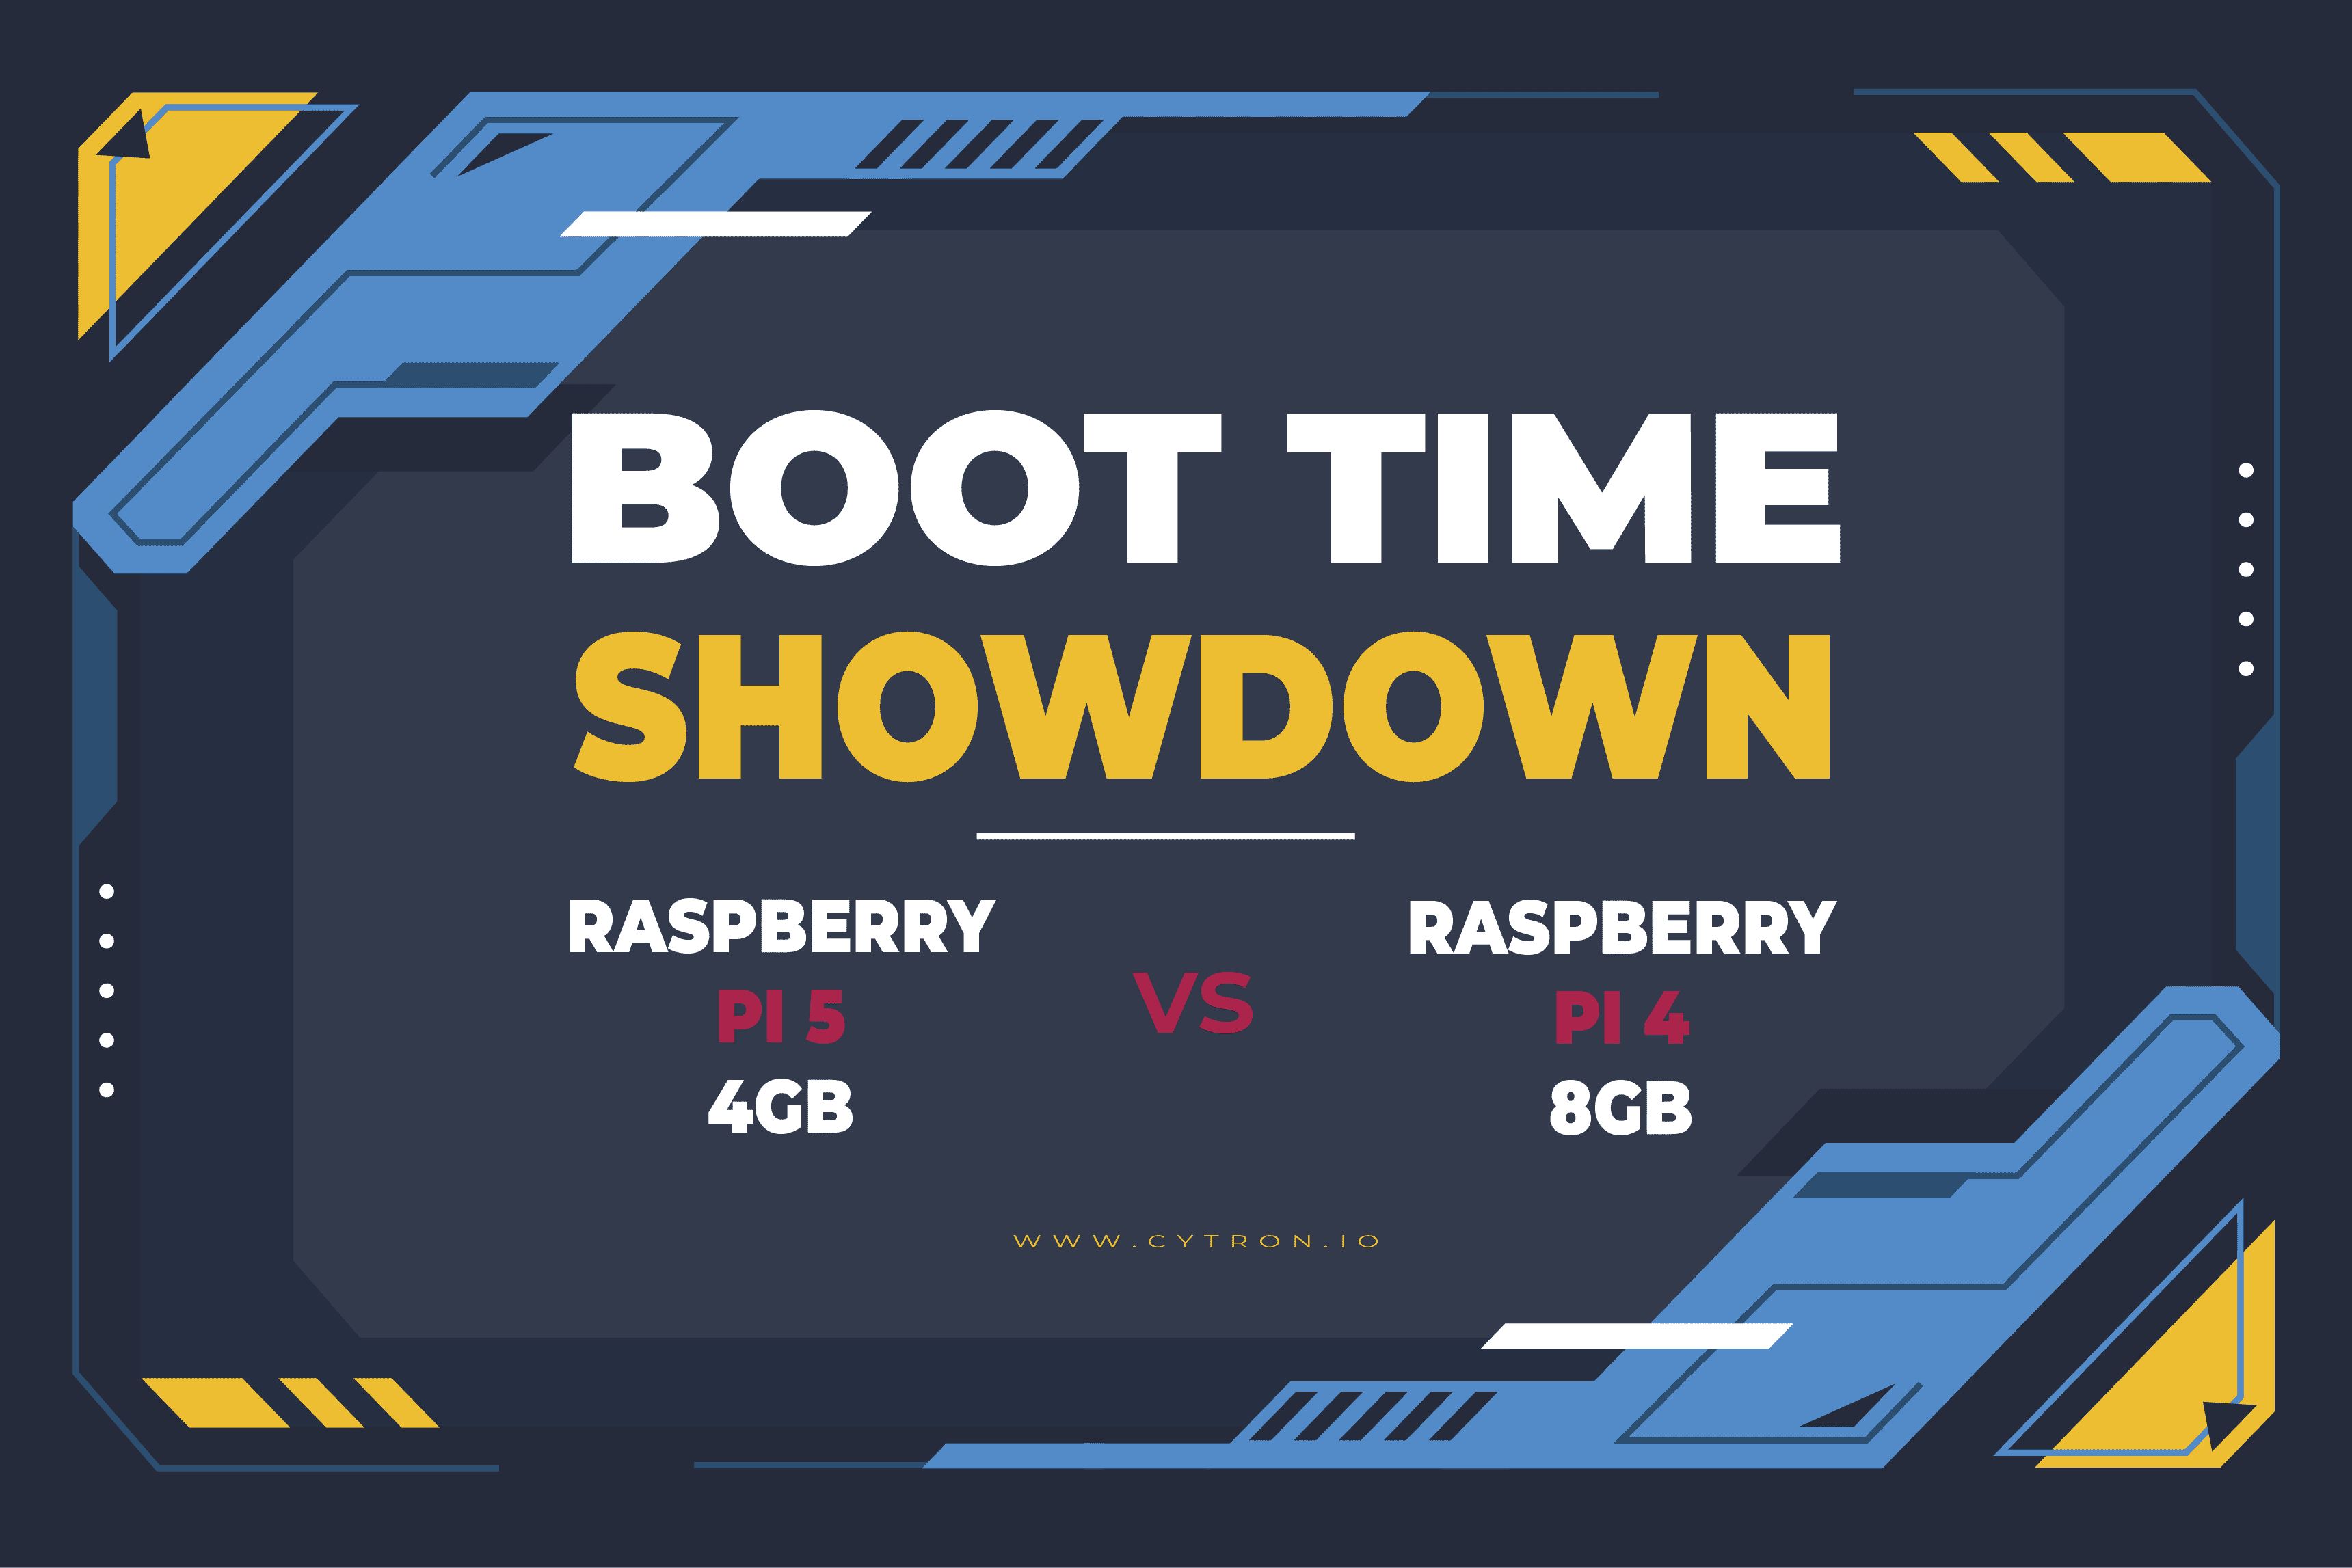 Raspberry Pi 5 vs Raspberry Pi 4 Boot Time: An In-Depth Comparison